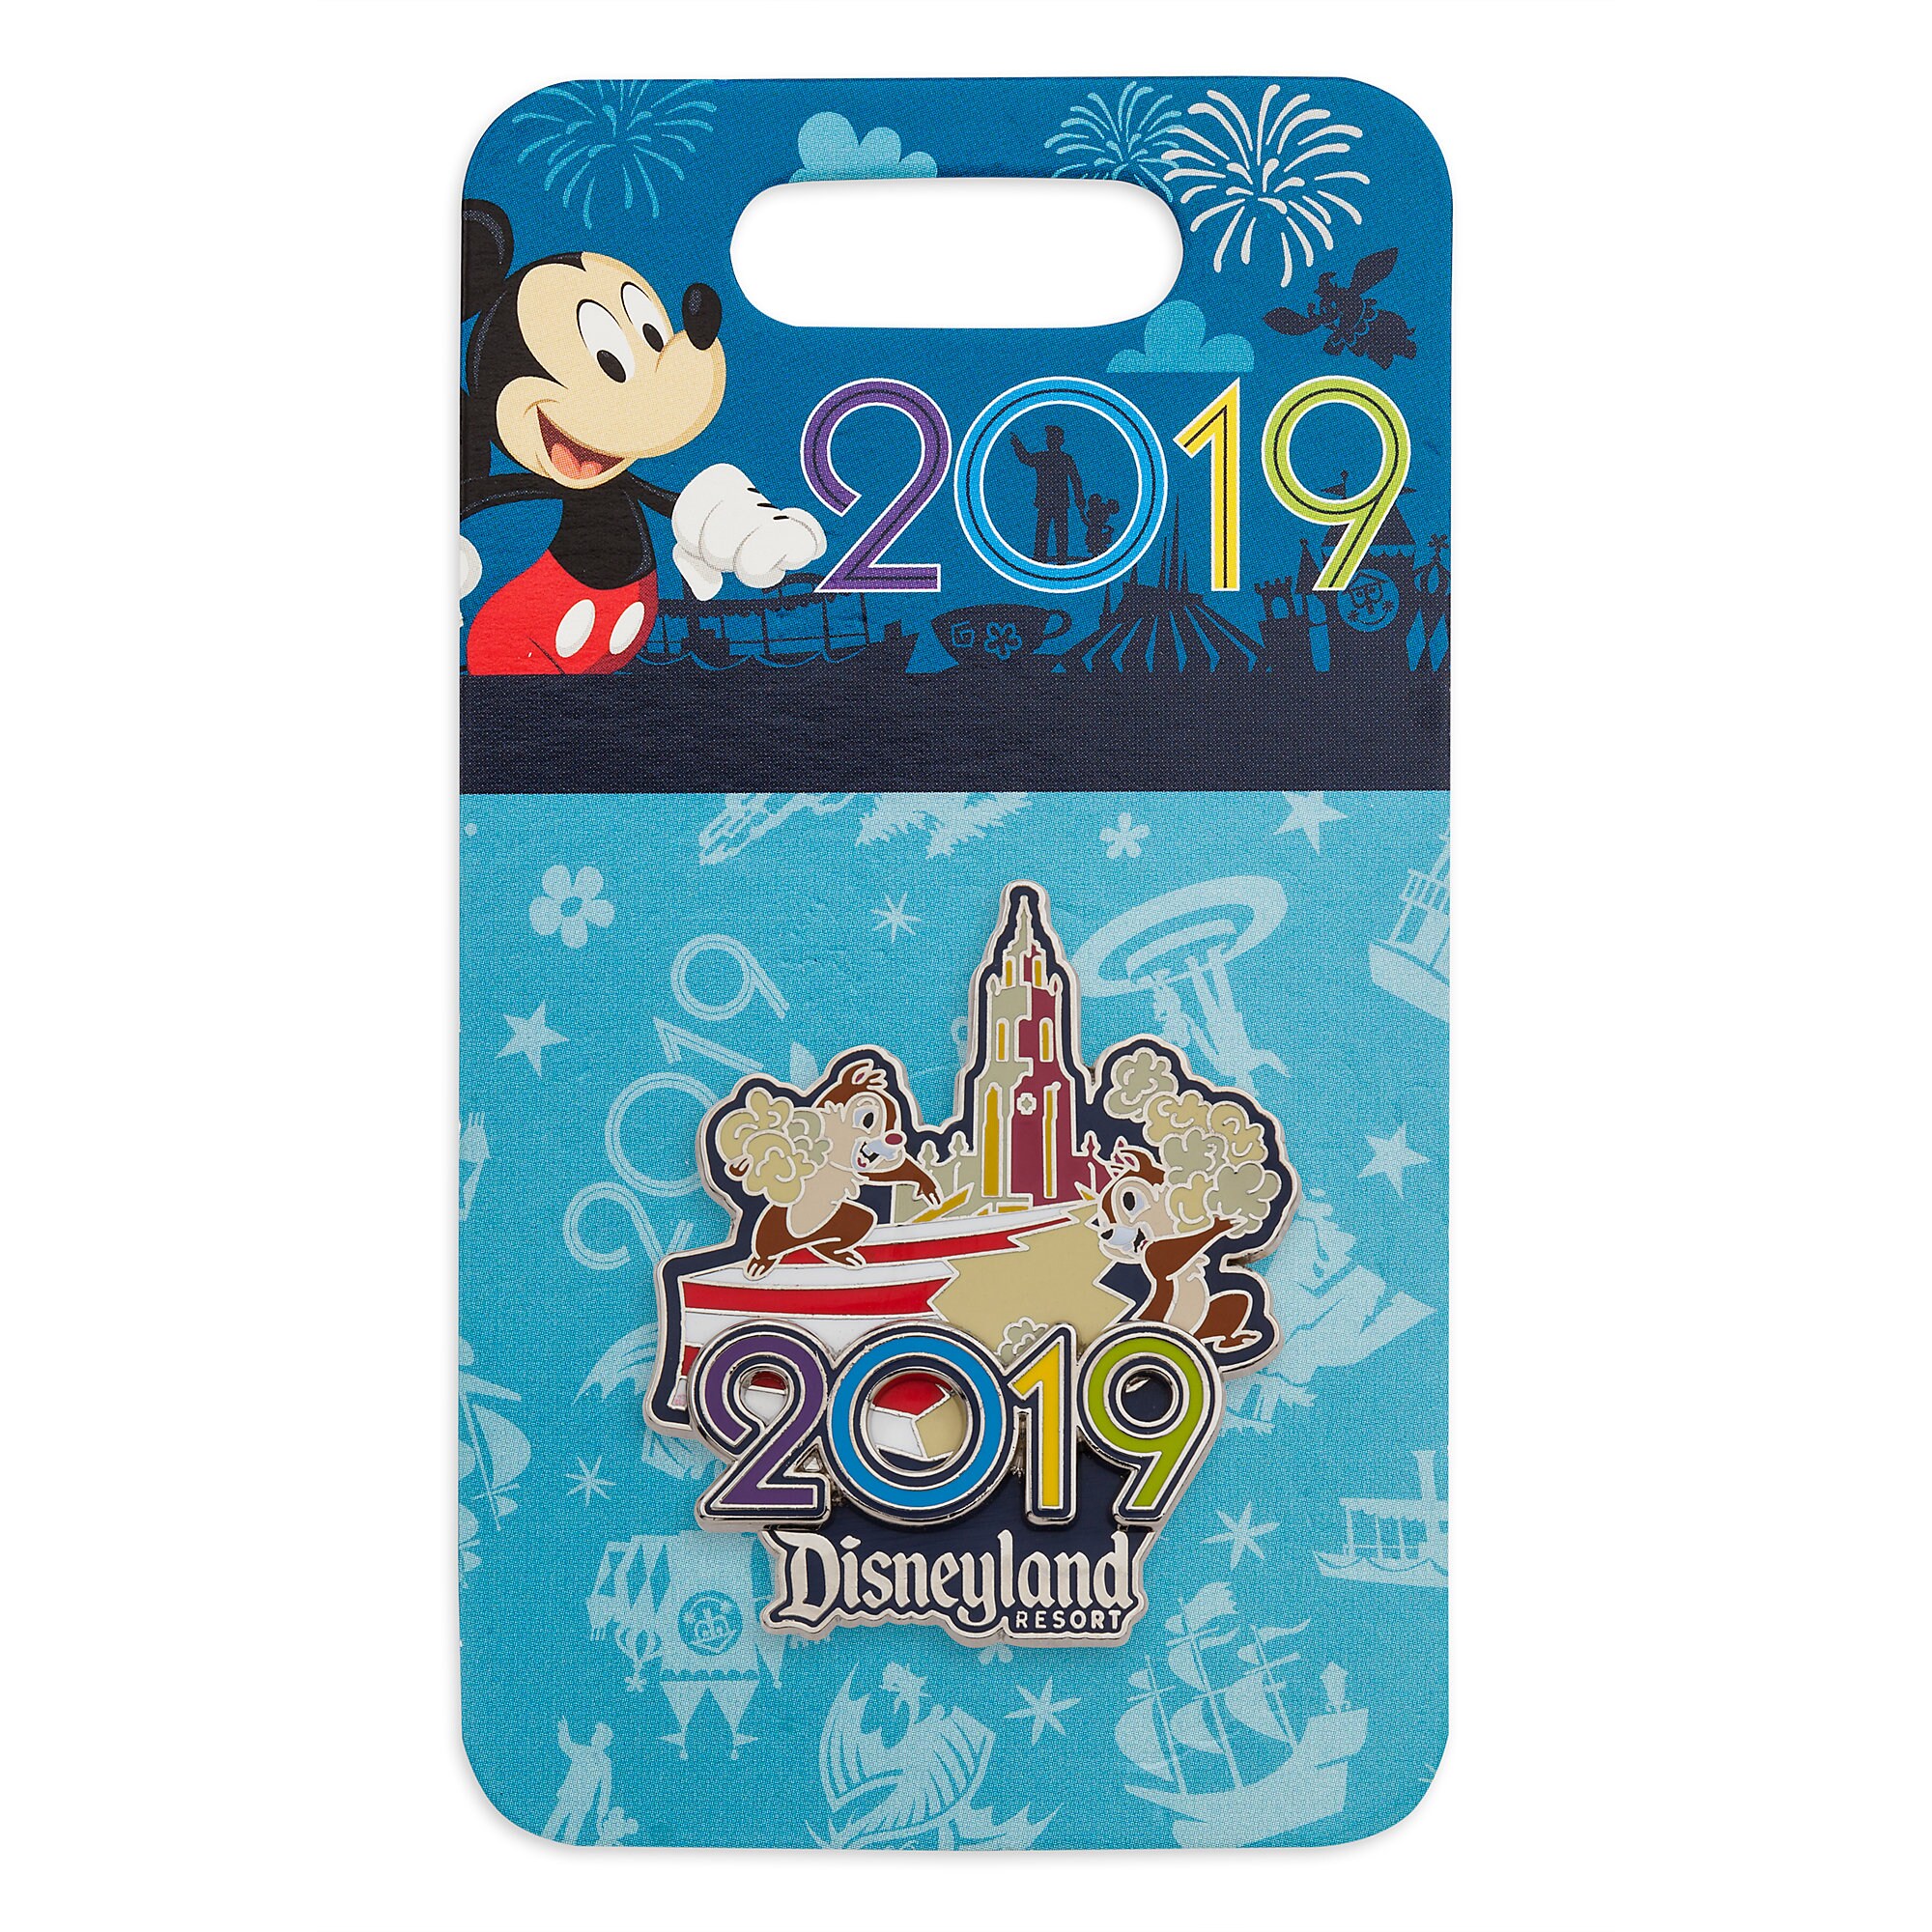 Chip 'n Dale Disneyland 2019 Pin